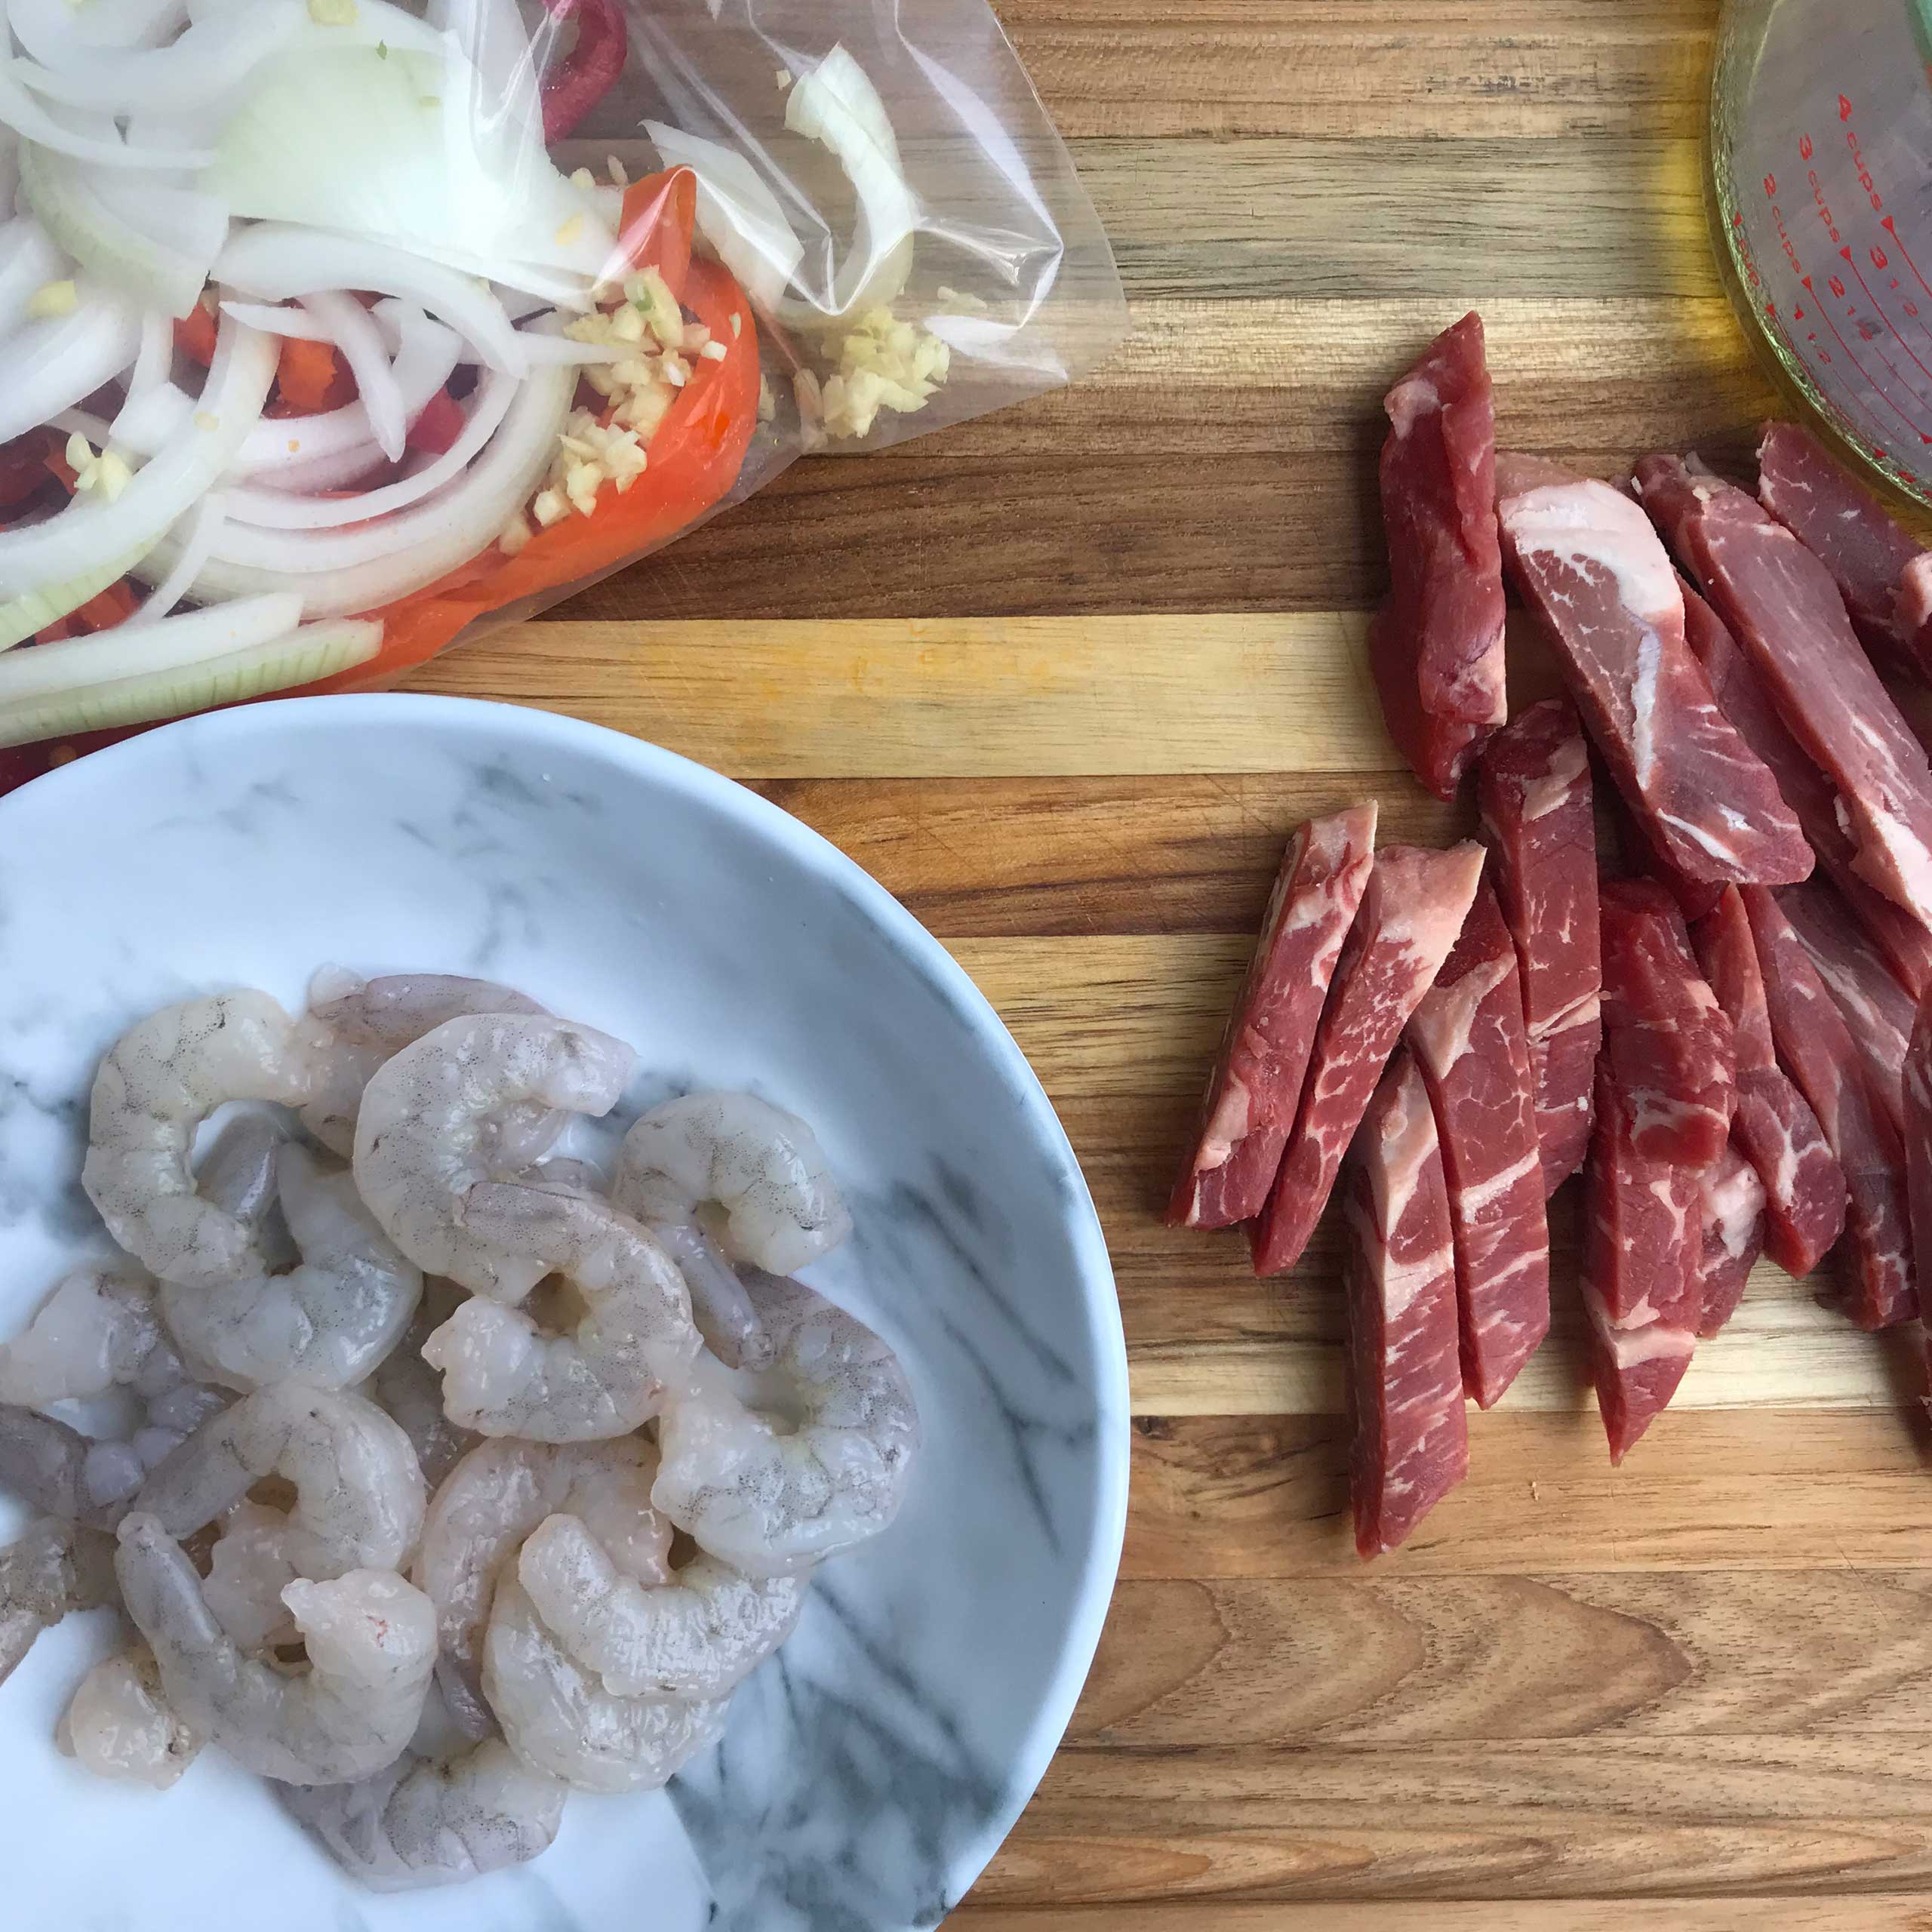 shrimp, veggies and steak for fajitas.